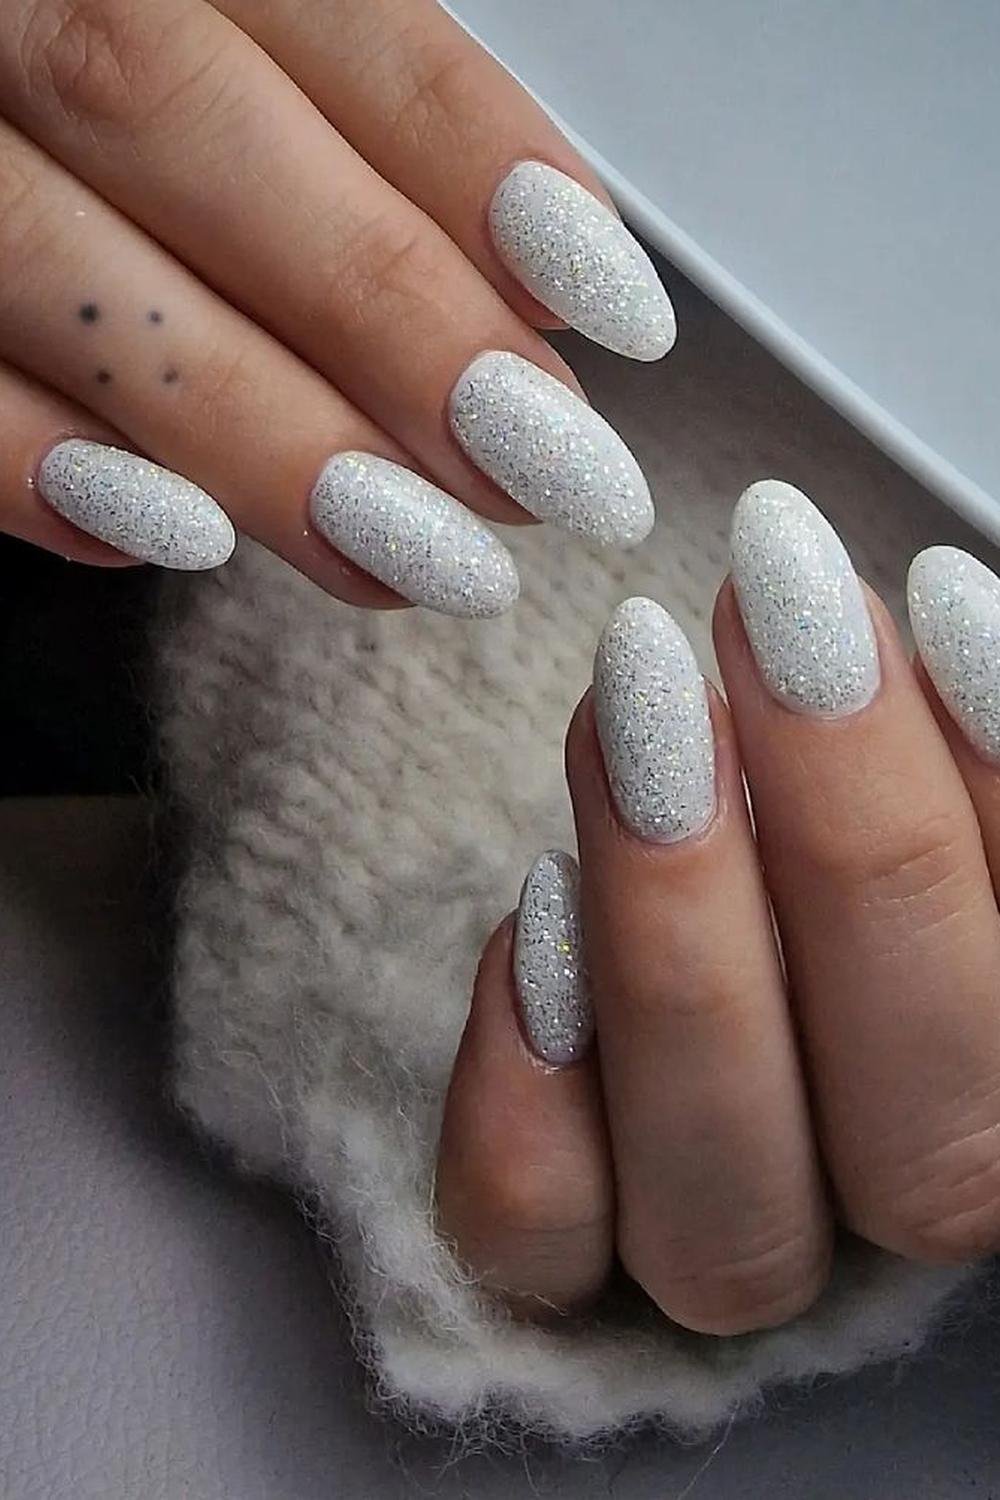 5 - Picture of White Glitter Nails